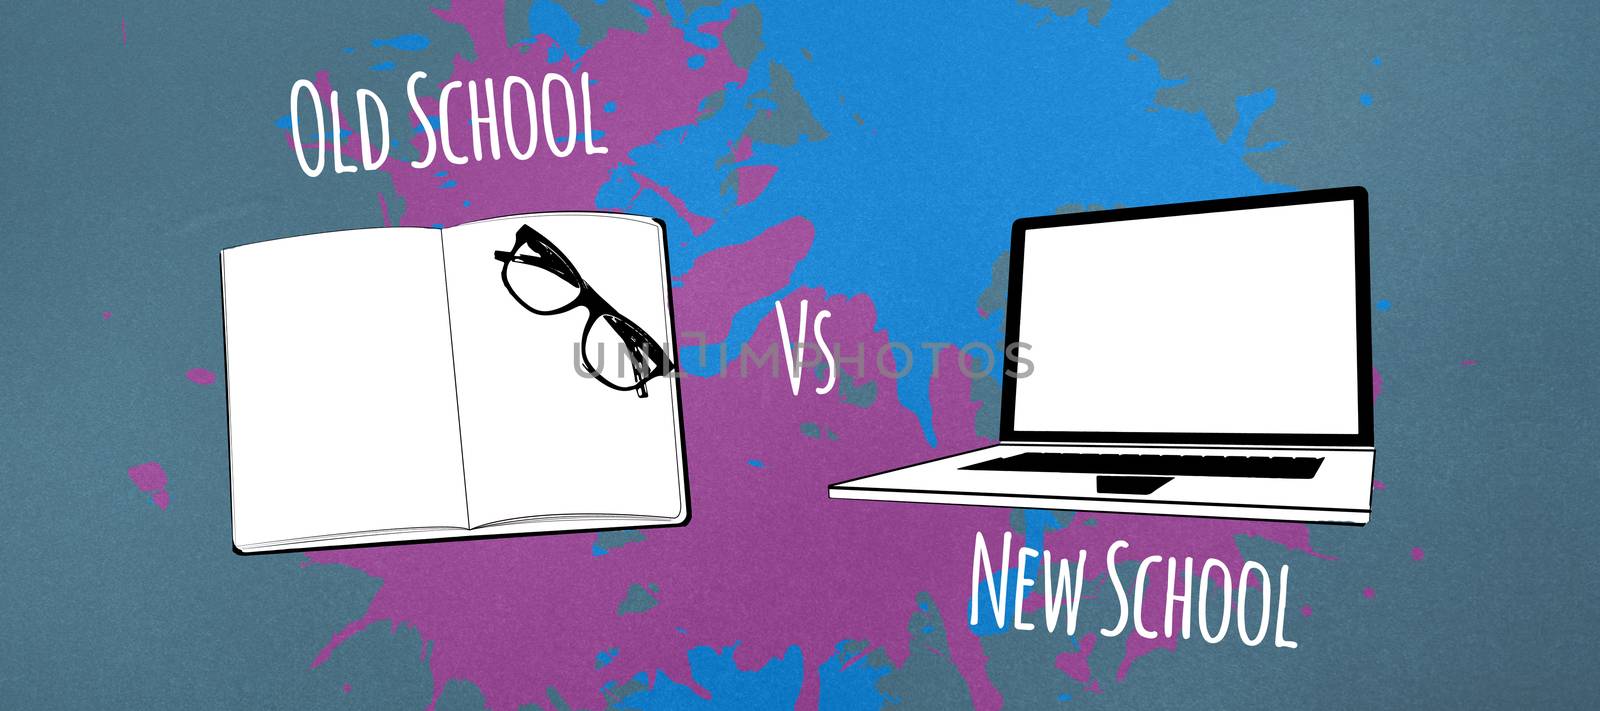 Composite image of old school vs new school  by Wavebreakmedia